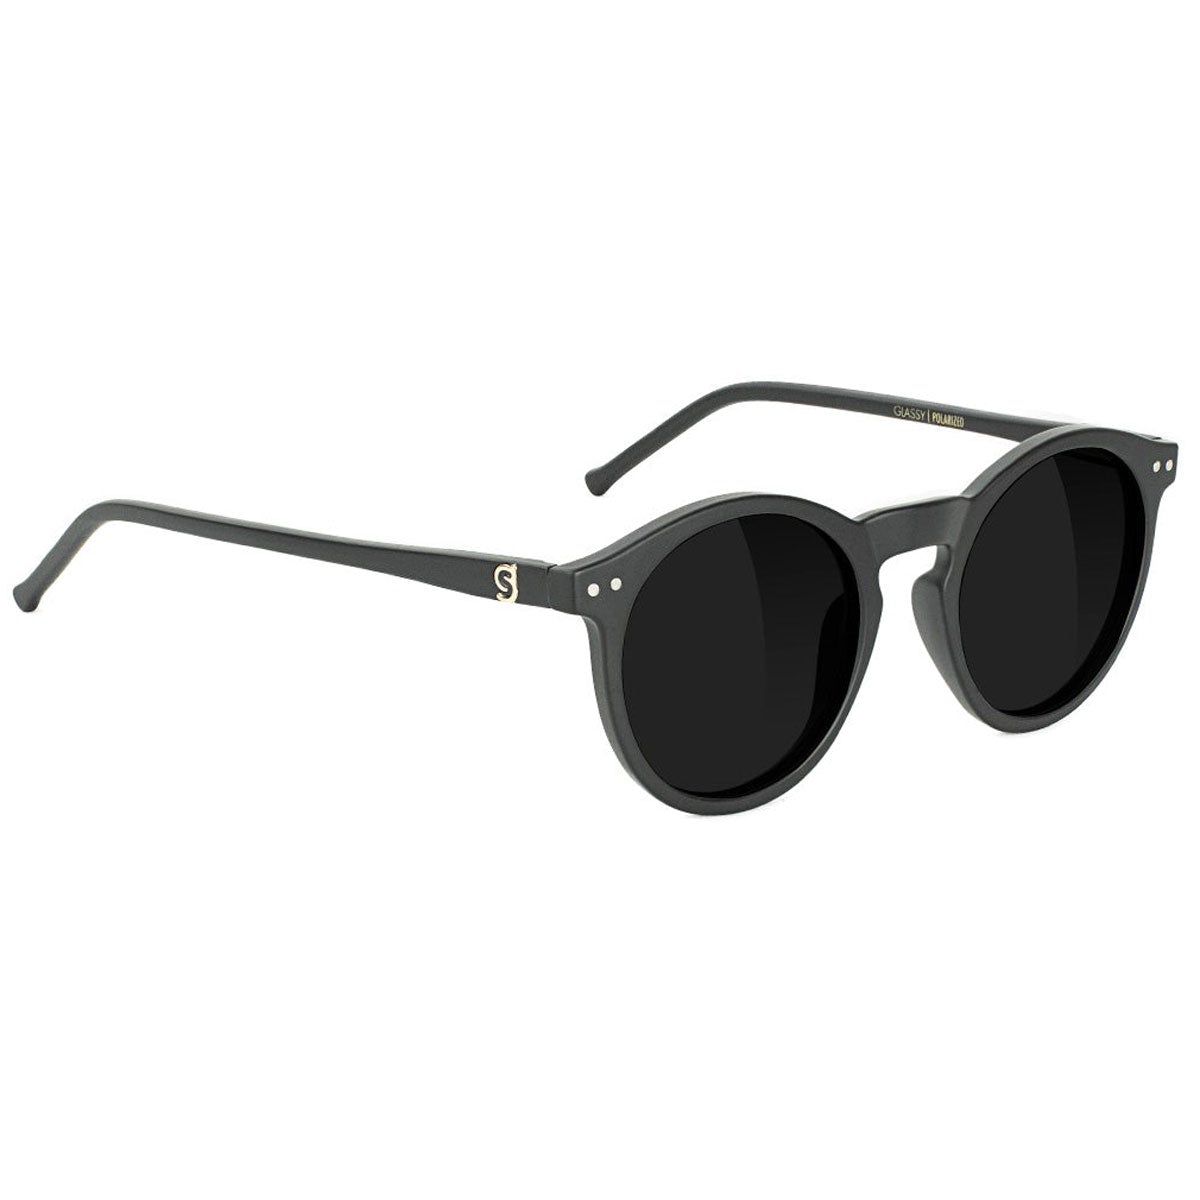 Glassy Apollo Premium Polarized Sunglasses - Matte Blackout image 1